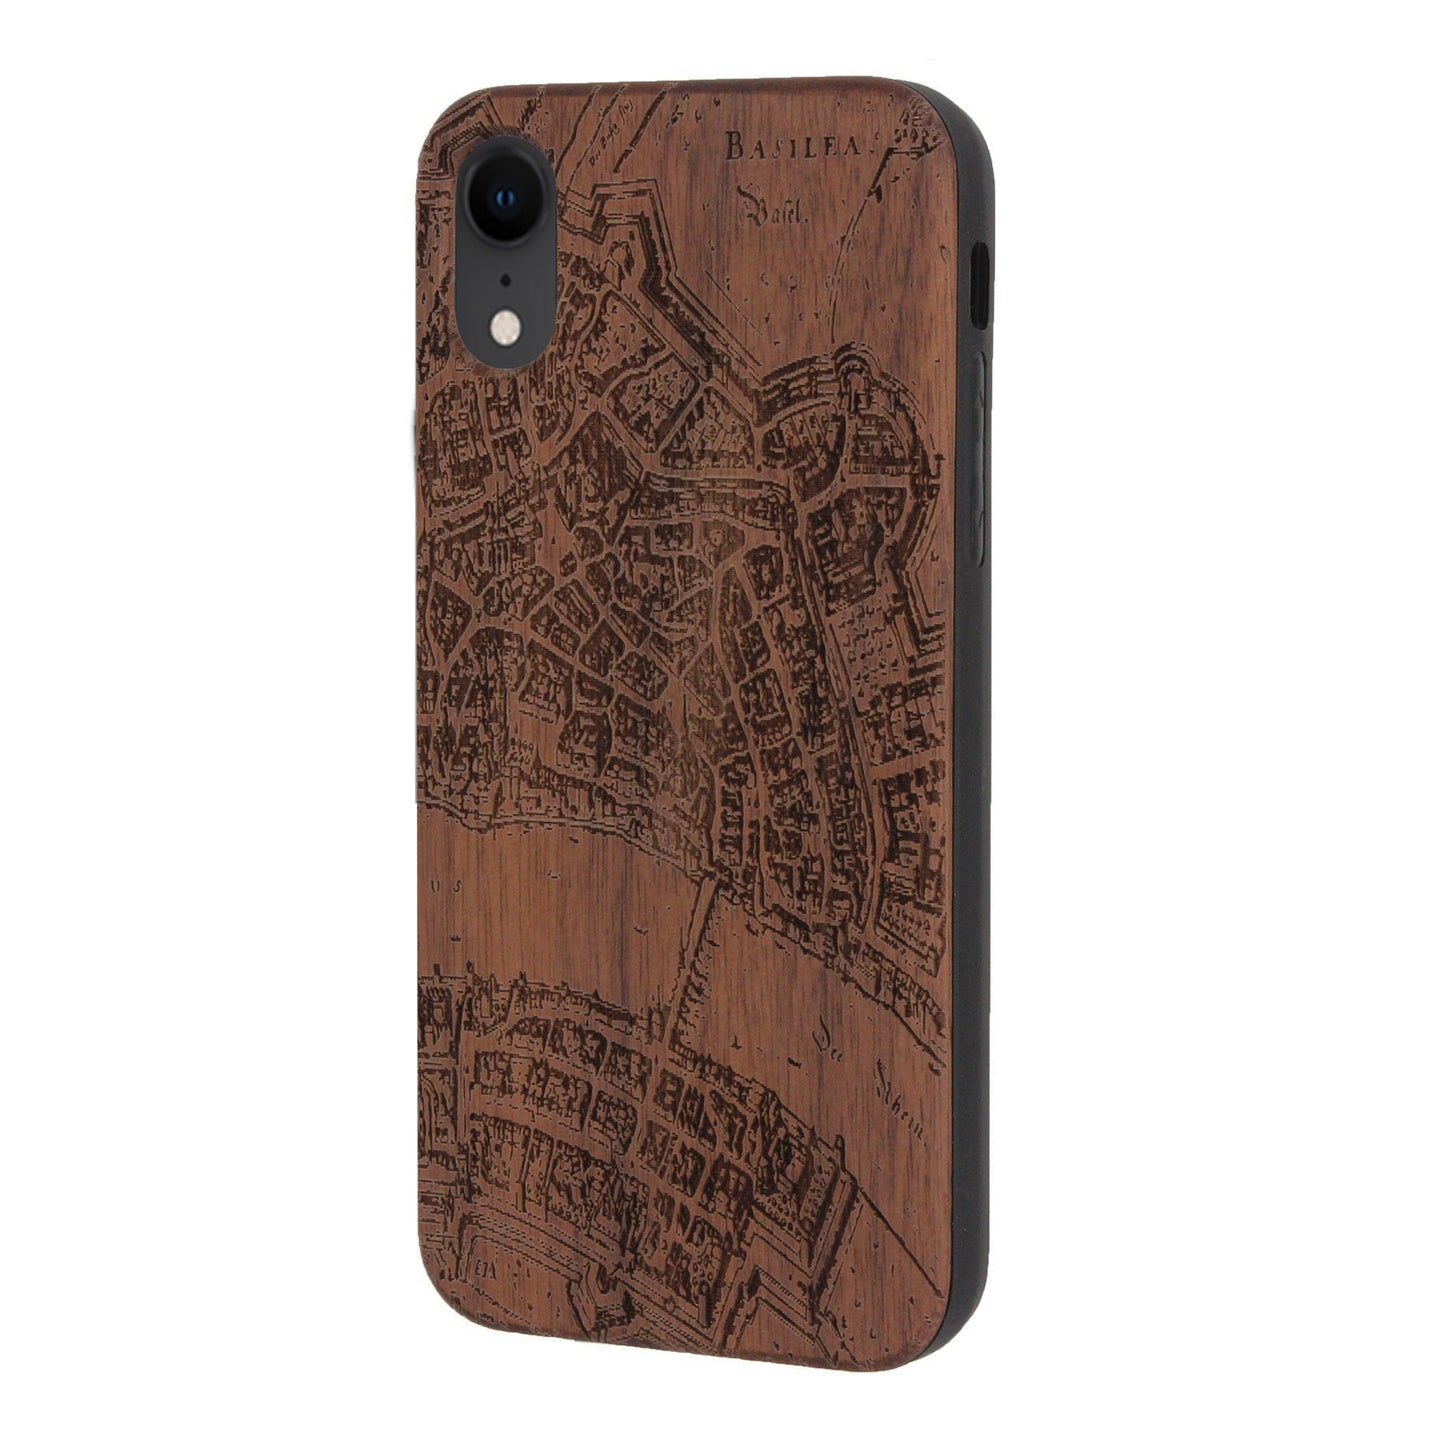 Basel Merian Eden case made of walnut wood for iPhone XR